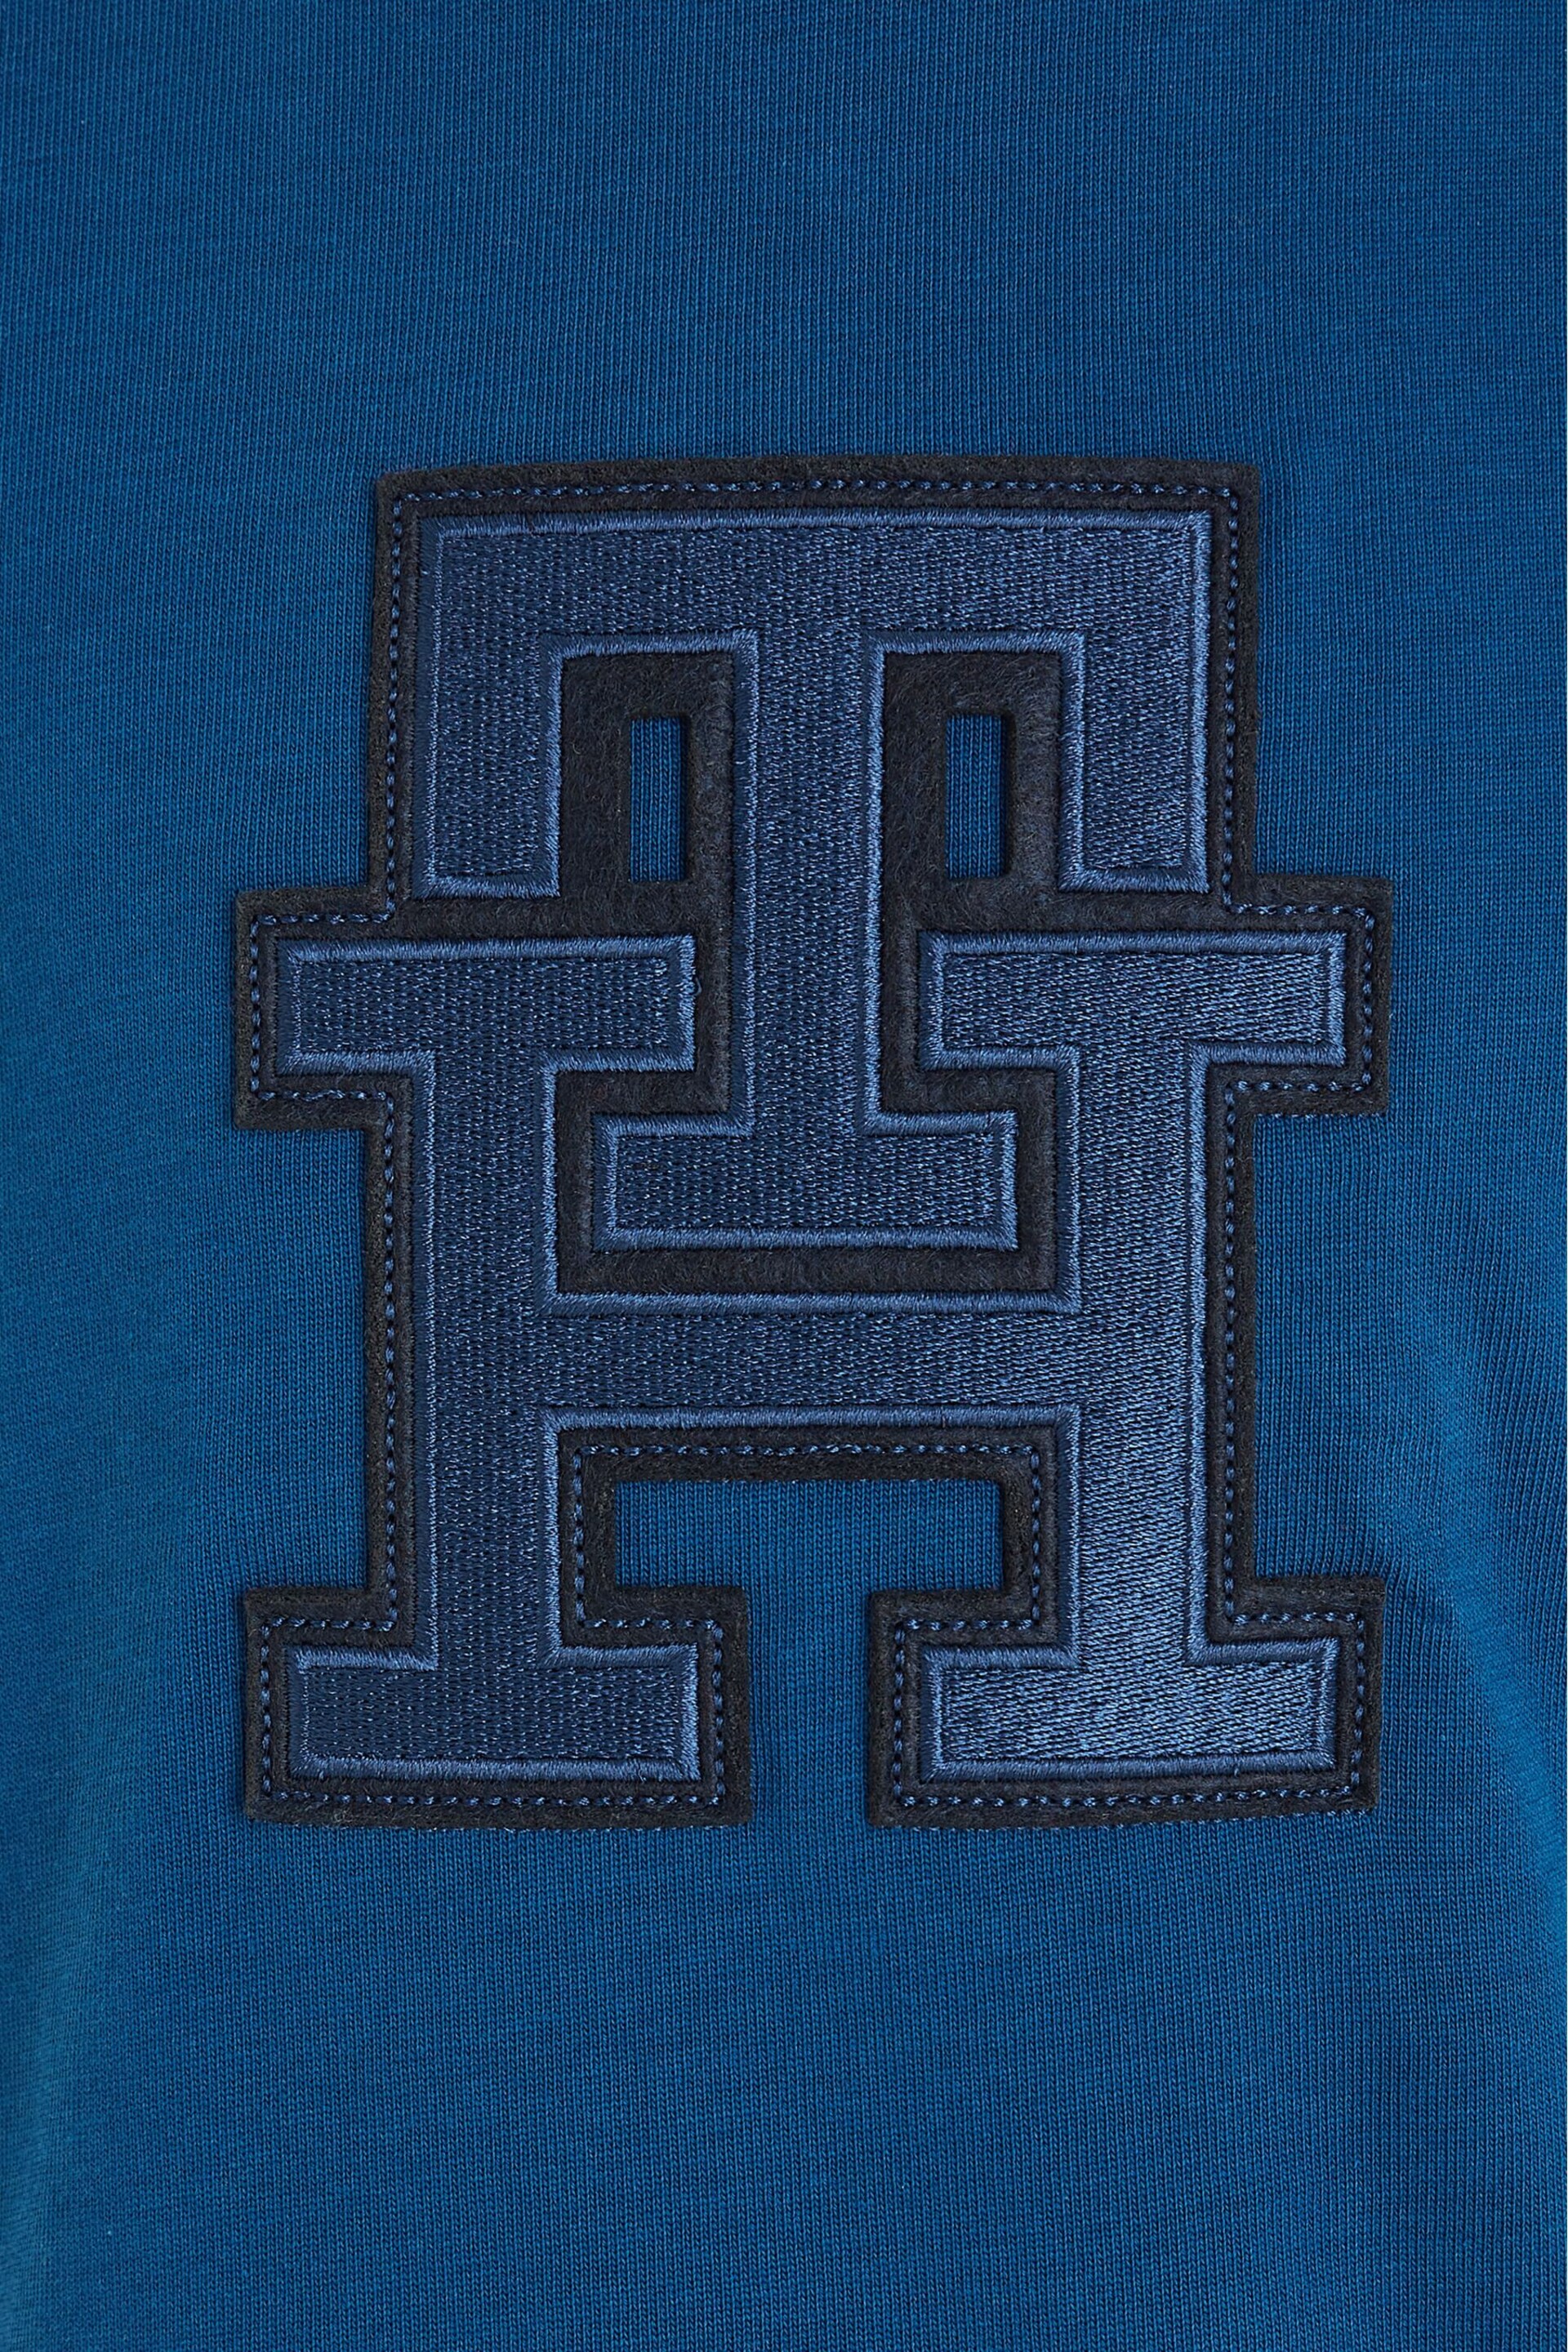 Tommy Hilfiger Unisex Kids Blue Monogram T-Shirt - Image 6 of 6